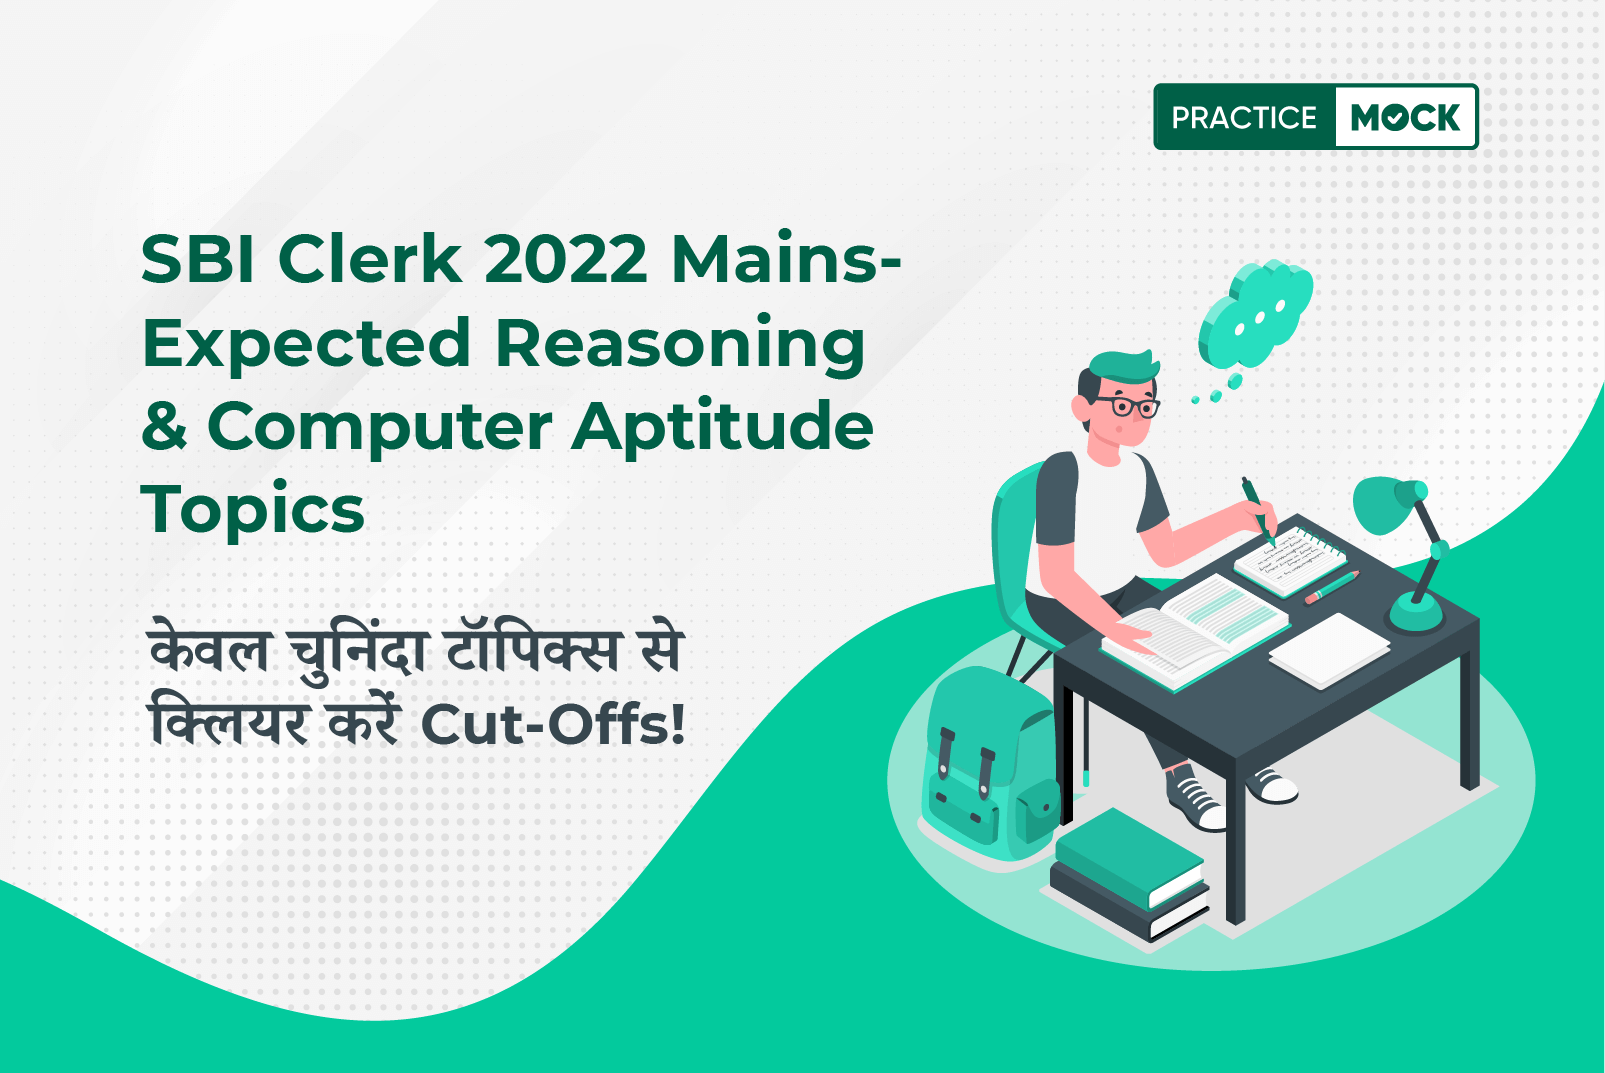 SBI Clerk 2022 Mains- Expected Reasoning and Computer Aptitude Topics